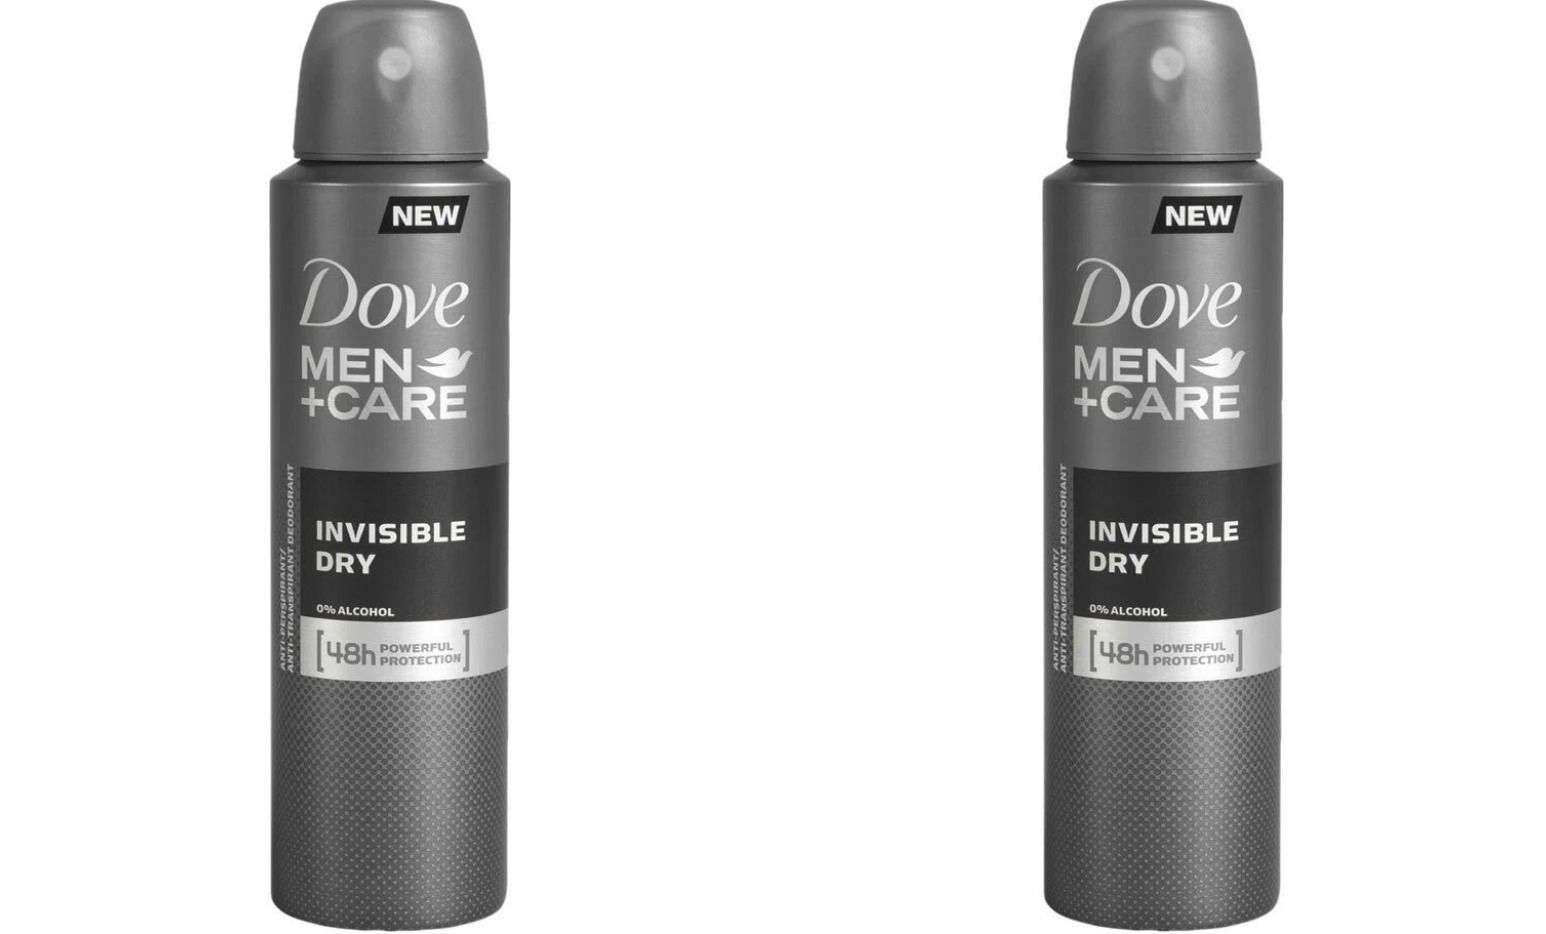 Dove дезодорант мужской